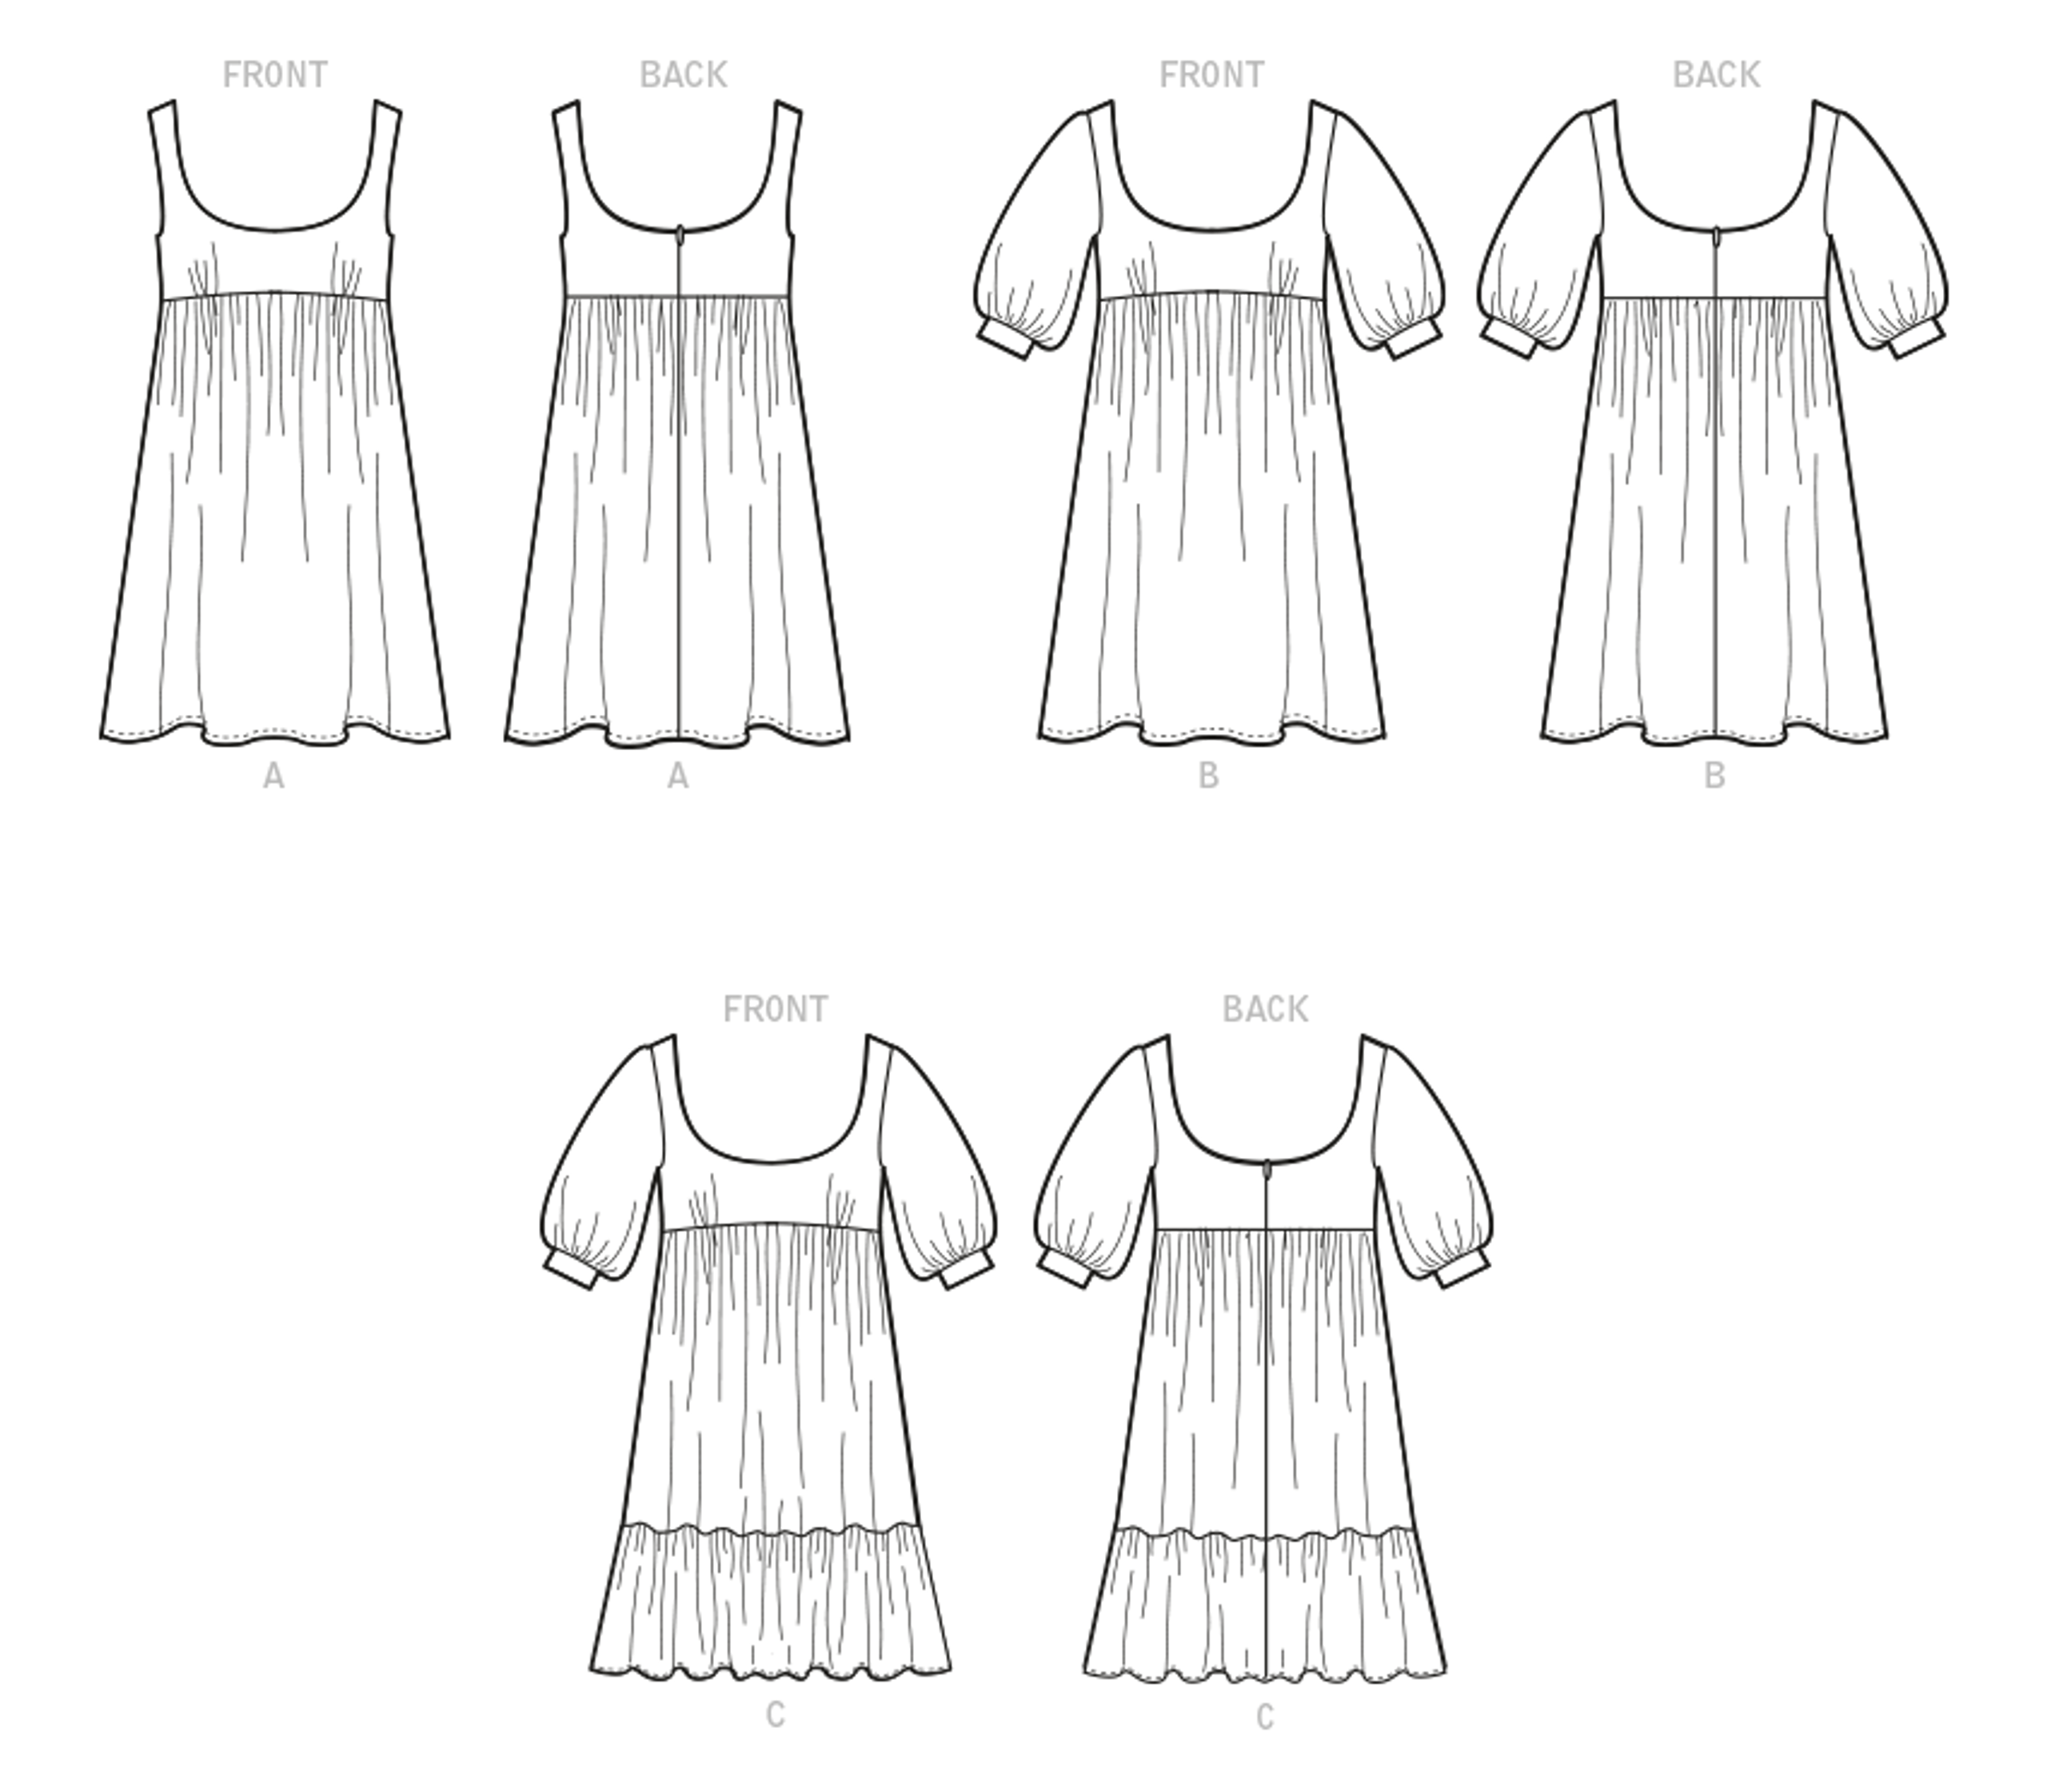 M8197 | Misses' Dresses | McCall's Patterns